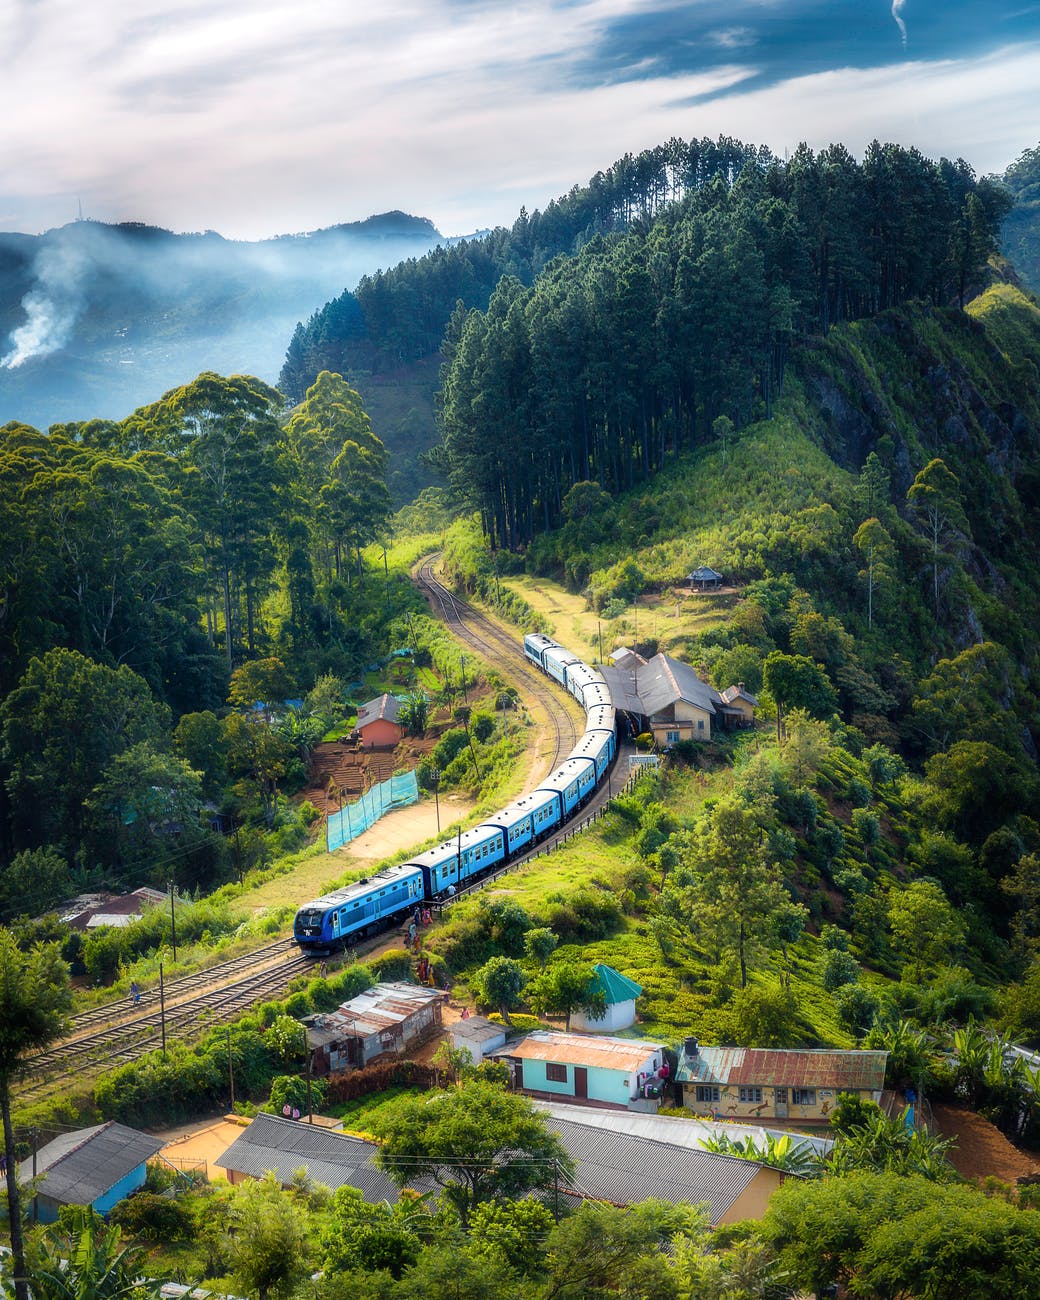 photo of railway on mountain near houses